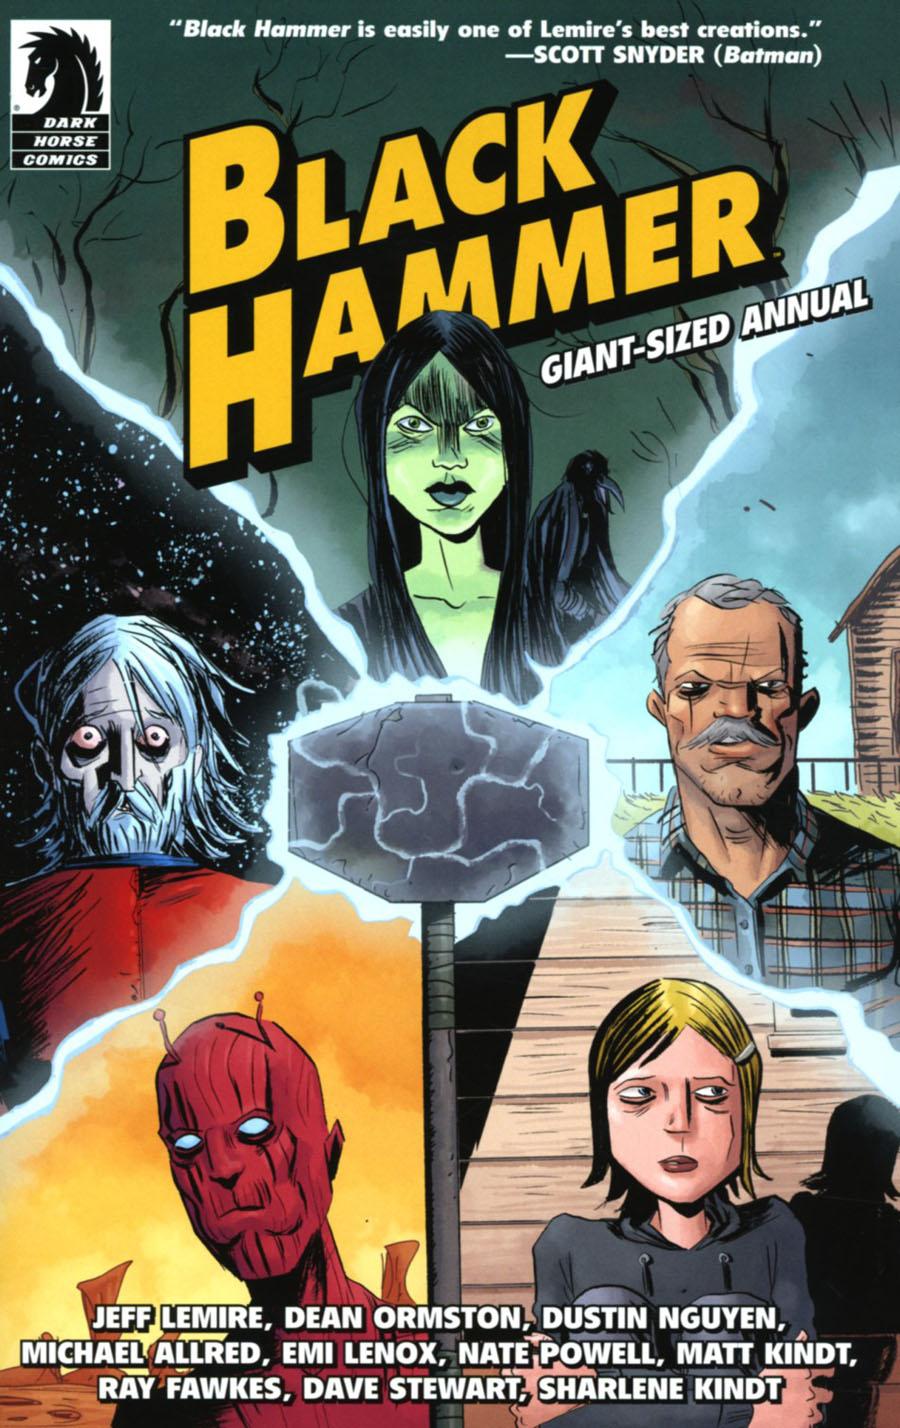 Black Hammer Giant-Sized Vol. 1 #1